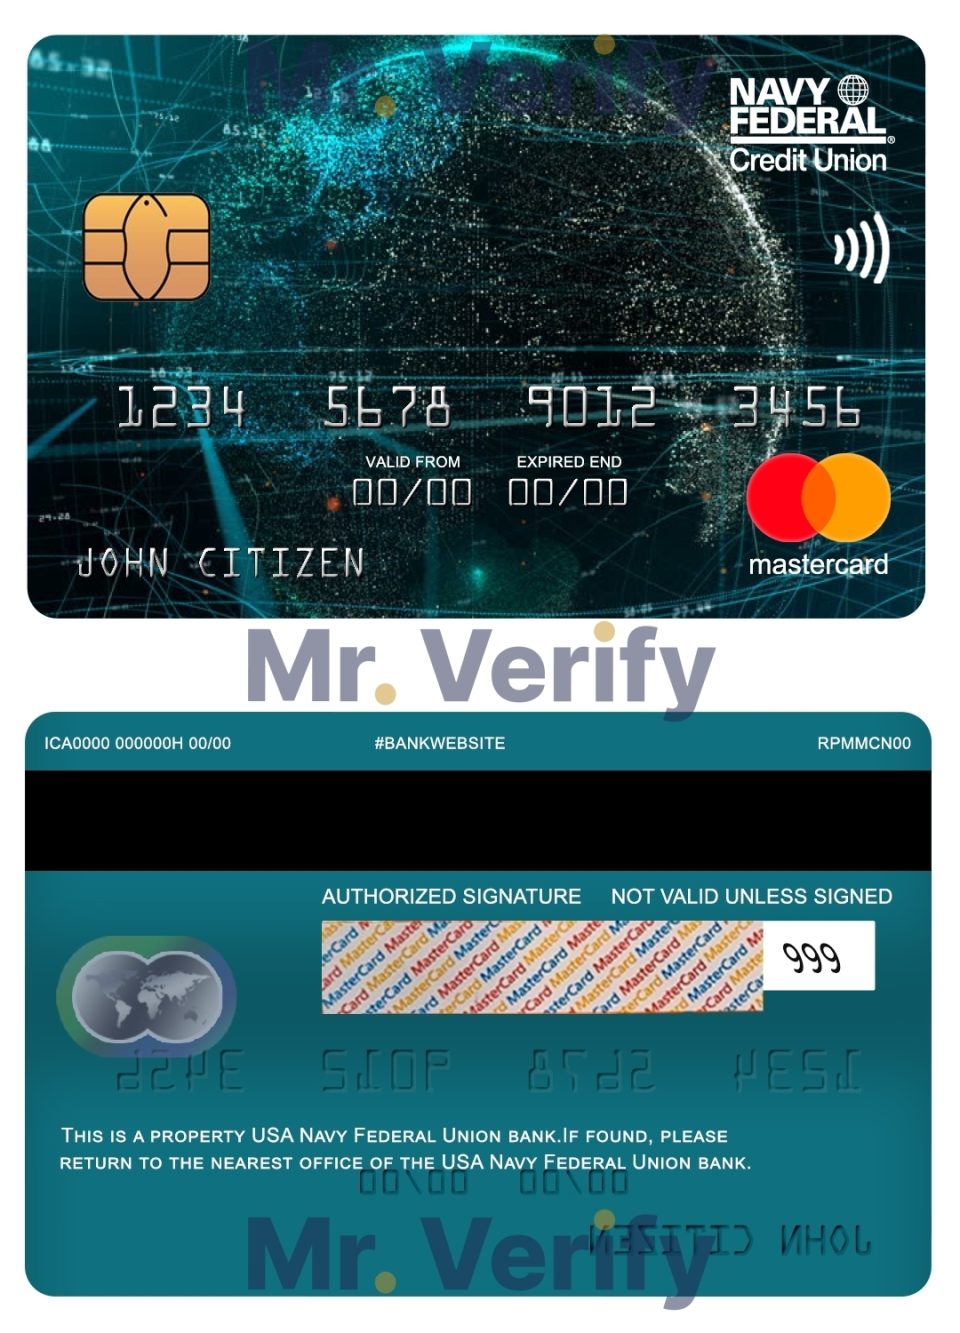 Fillable USA Navy Federal Union bank mastercard Templates | Layer-Based PSD